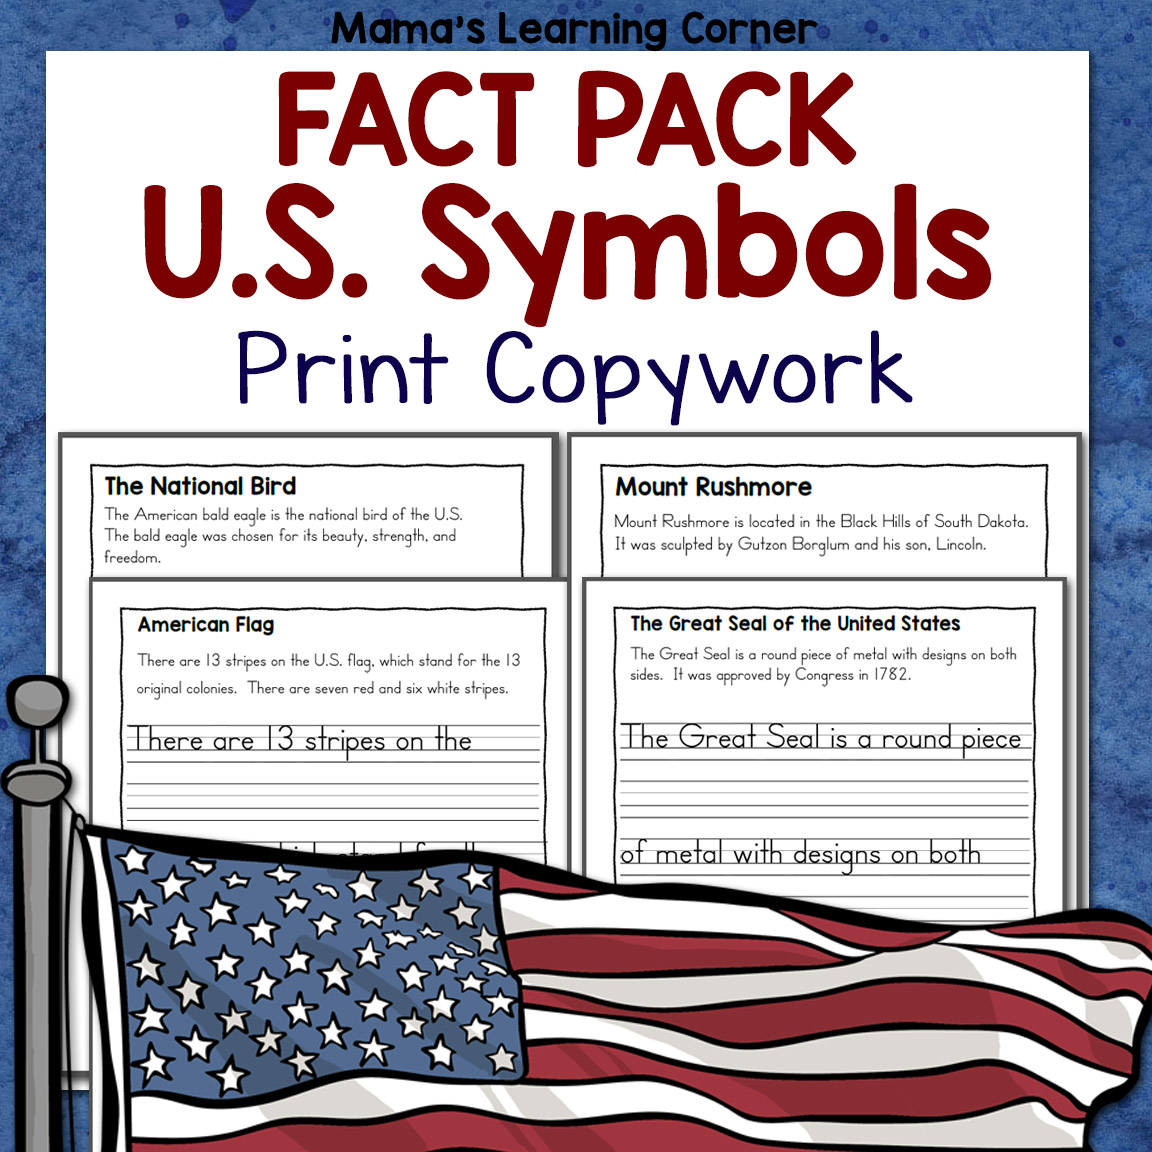 US Symbols Fact Pack Print Copywork